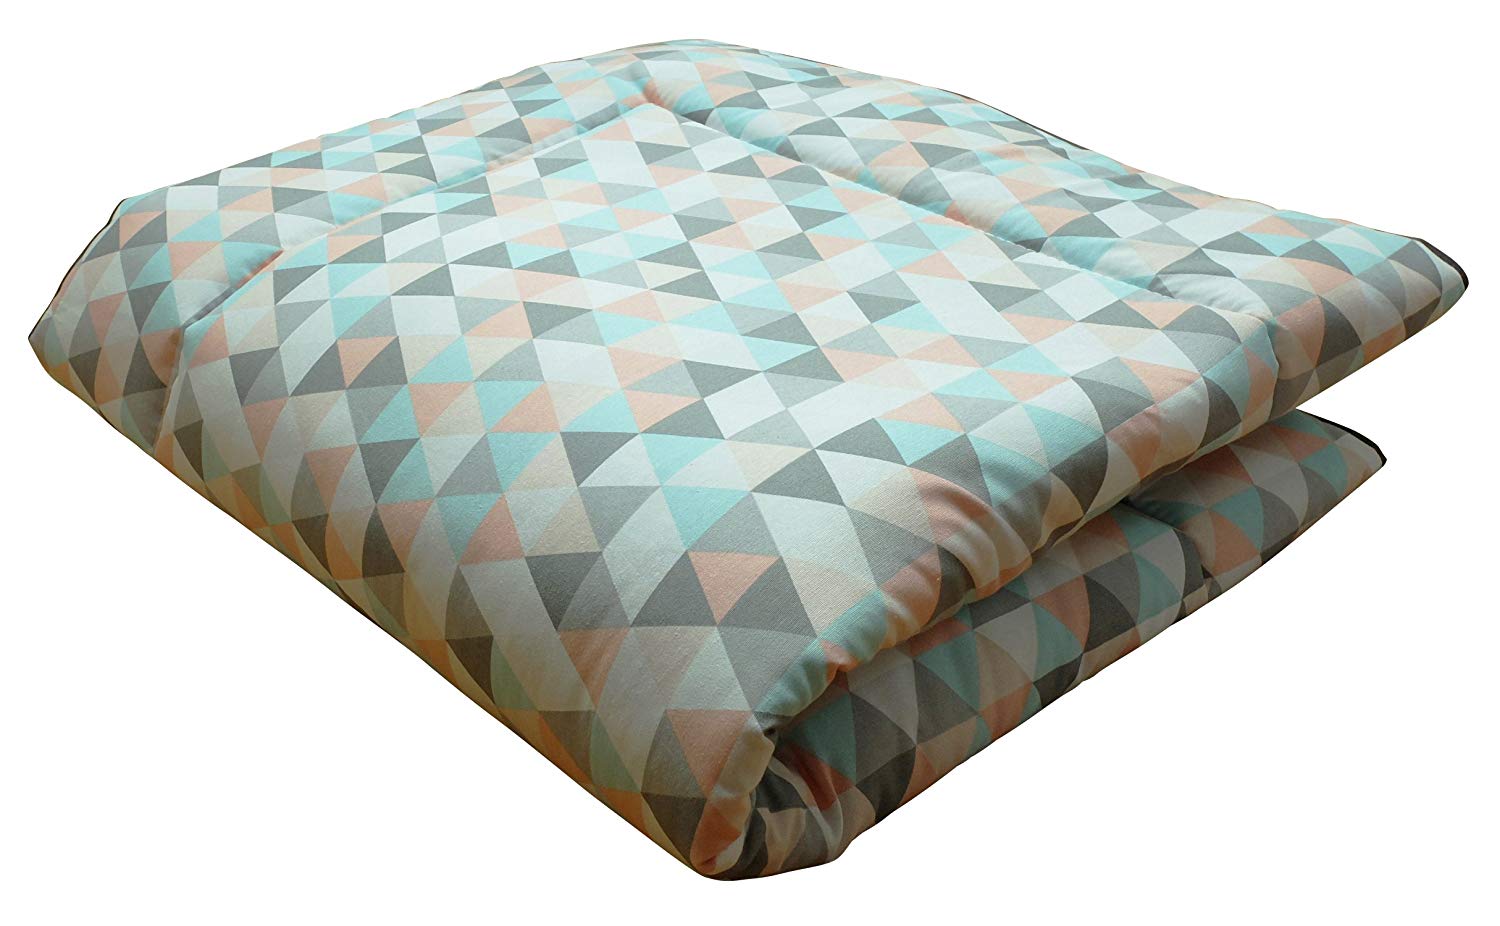 Ideenreich 2388 Crawling Blanket King Playpen Mattress, 120 x 120 cm Multi-Coloured